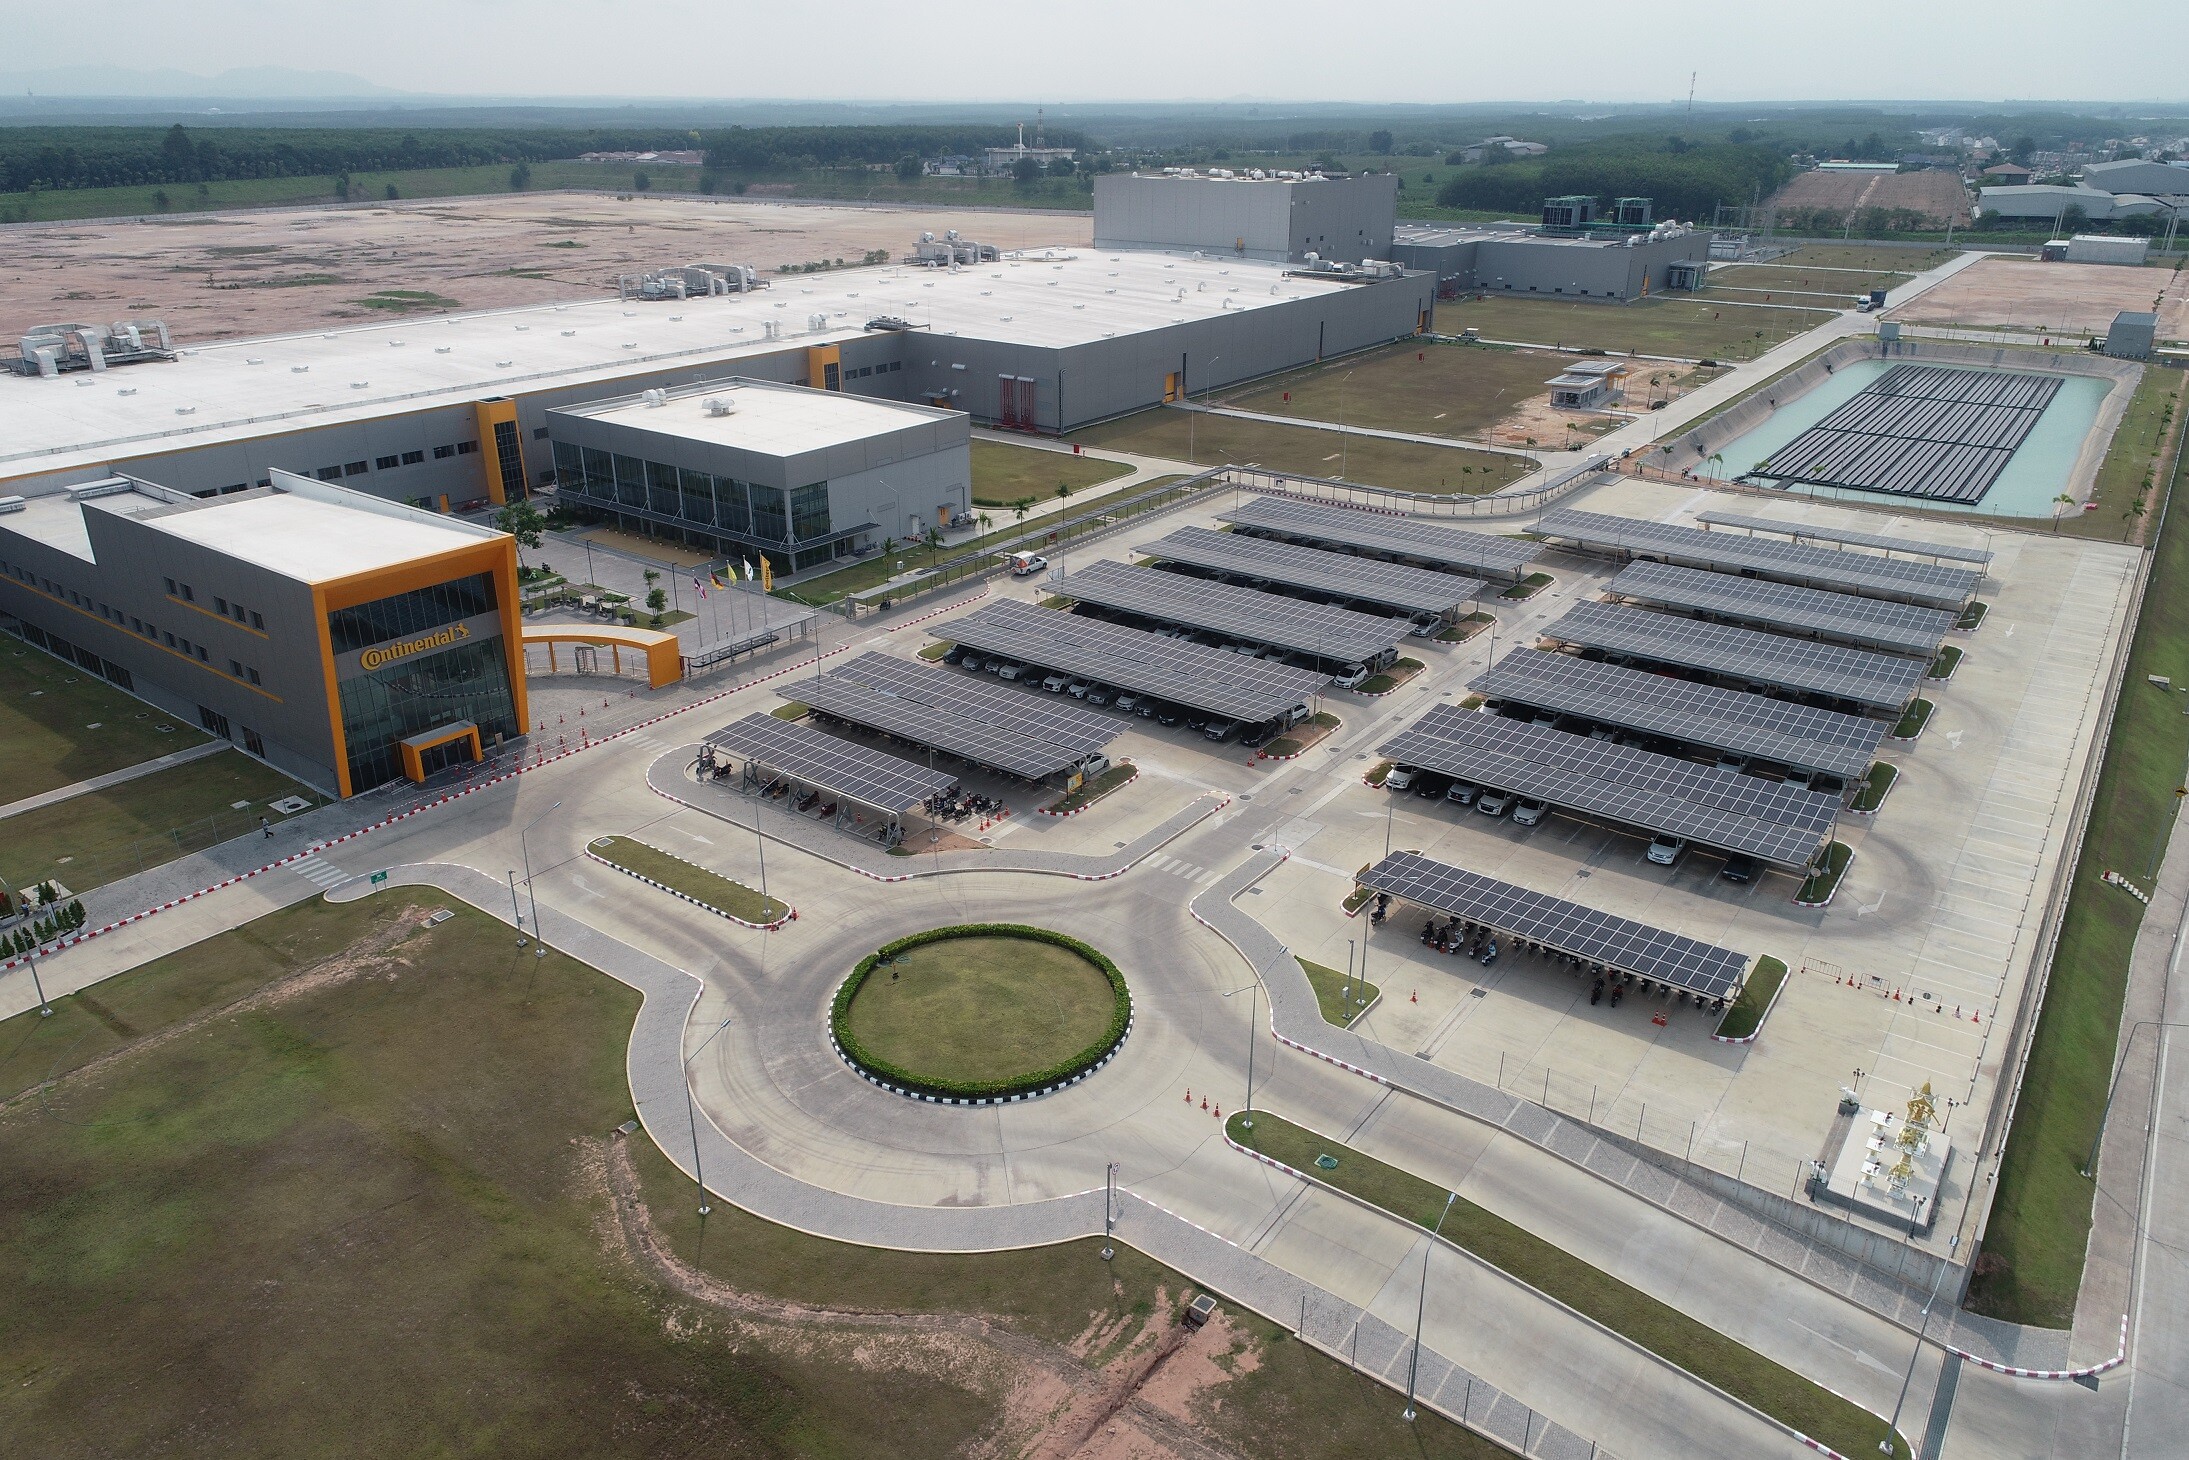 "WHAUP" ฤกษ์ดี เปิดโครงการ Solar PV ECO System ภายในนิคมฯ ดับบลิวเอชเอ อีสเทิร์นซีบอร์ด 4 บนพื้นที่โรงงาน "คอนติเนนทอล ไทร์ส (ประเทศไทย)" จ. ระยอง ขนาด 4.2 เมกะวัตต์